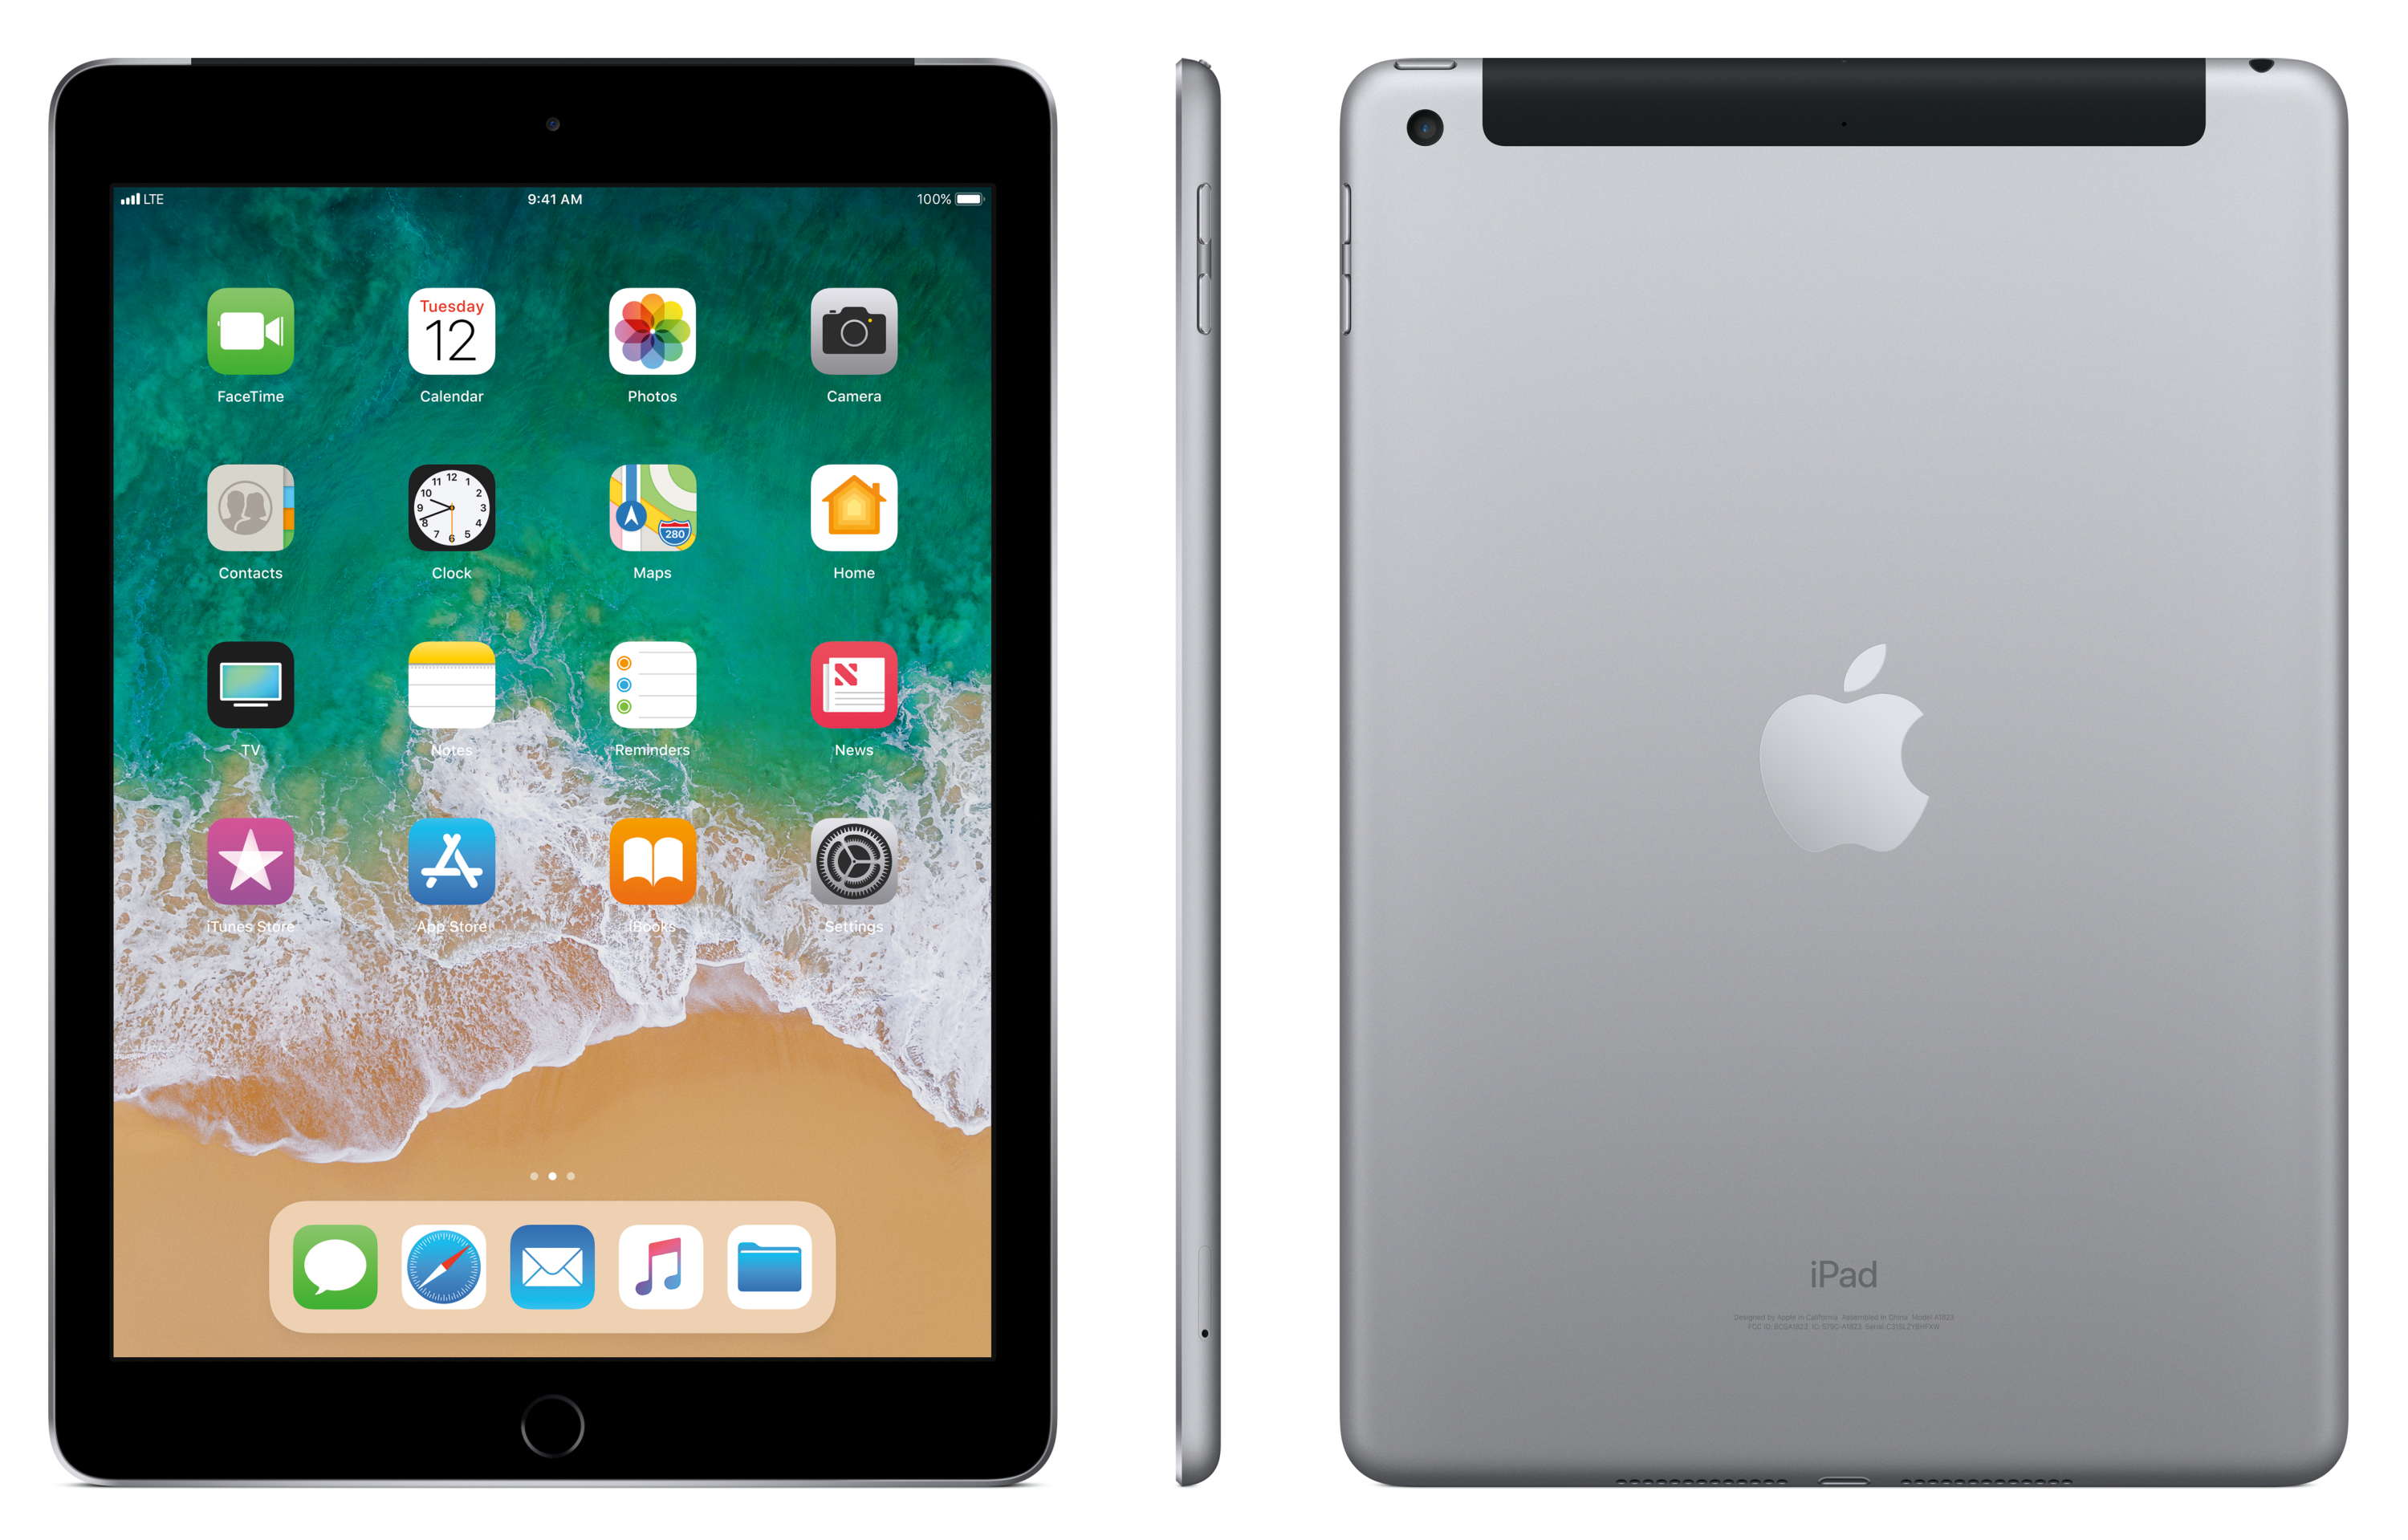 Apple iPad Wi-Fi + Cellular 128GB - Space Gray | Sweetwater